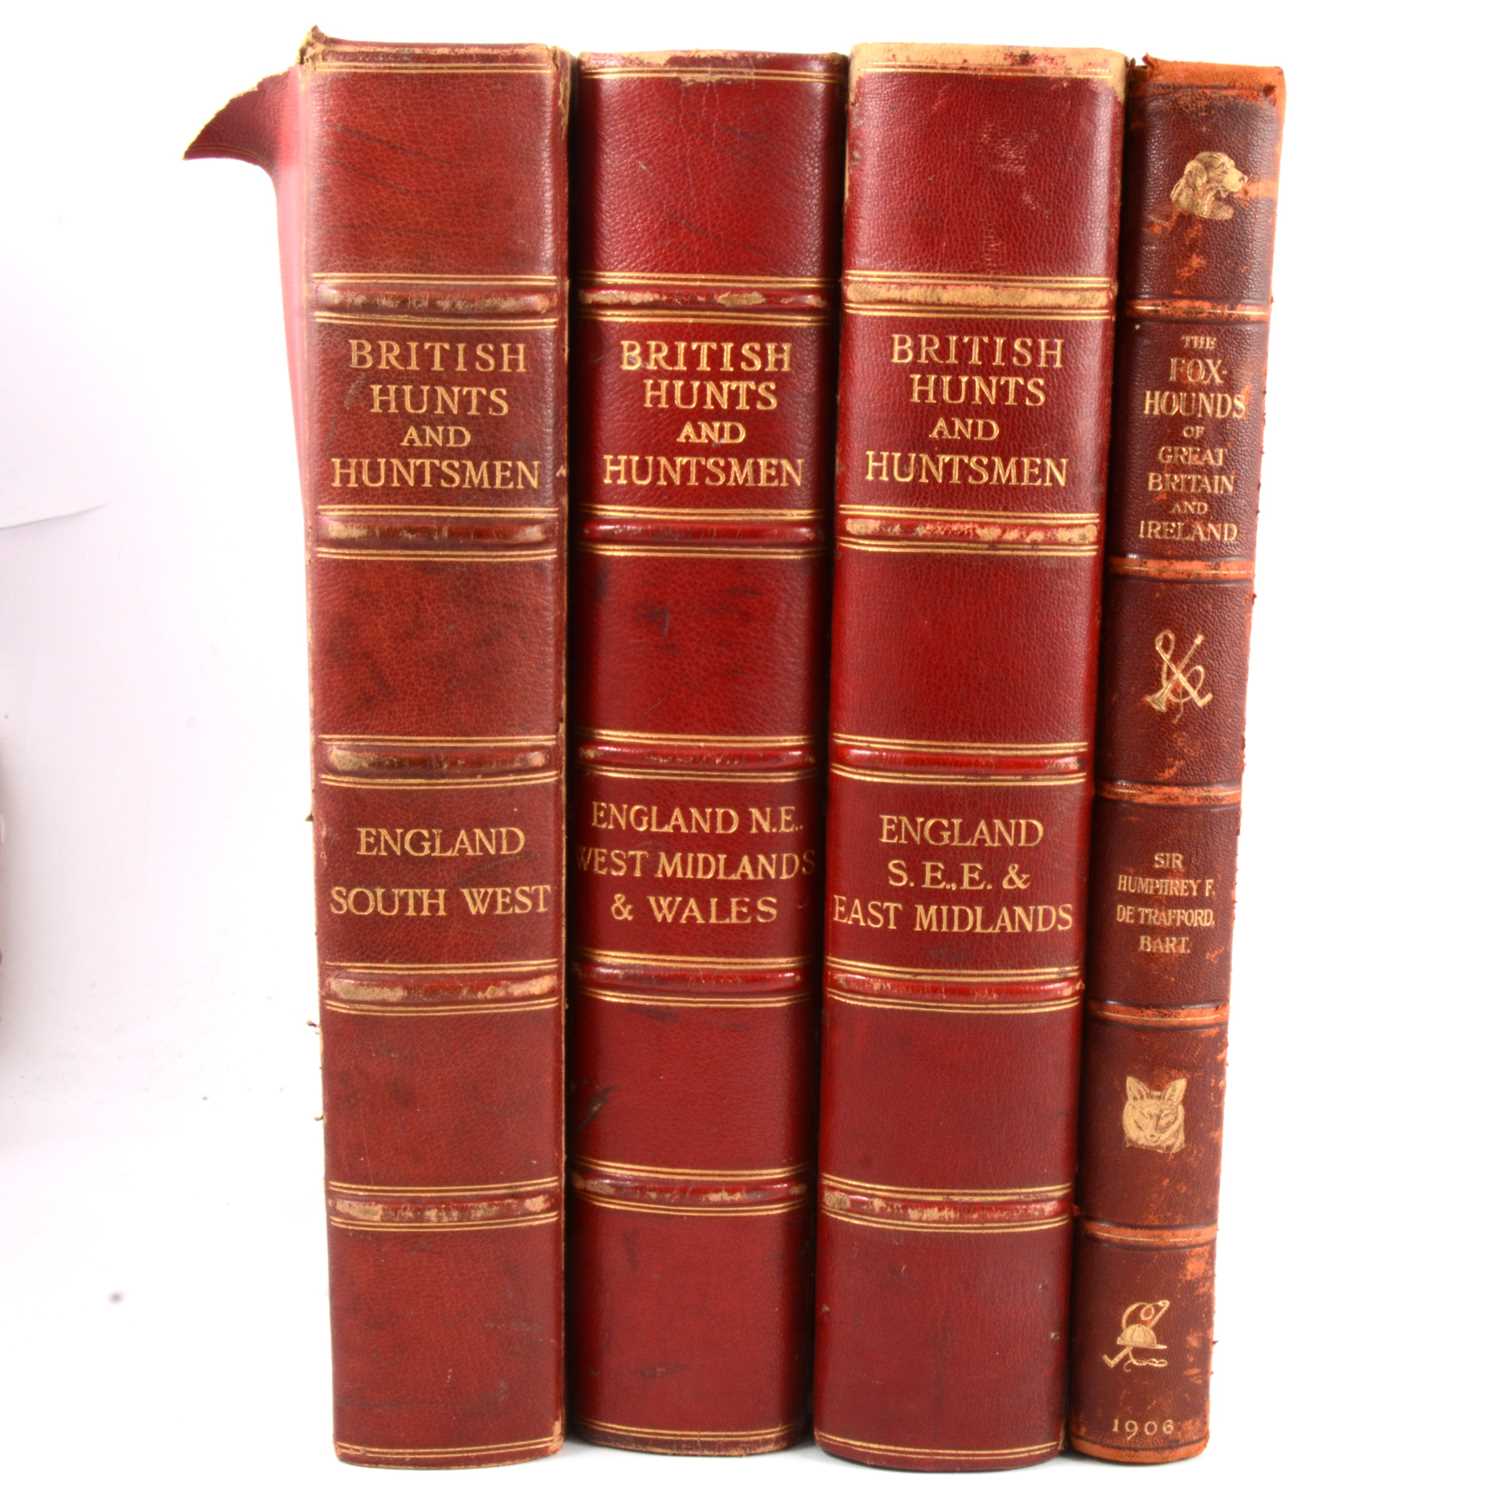 Lot 108 - British Hunts and Huntsmen, 3 volumes, and de Trafford, Sir Humphrey F., The Fox Hounds of Great Britain & Ireland.